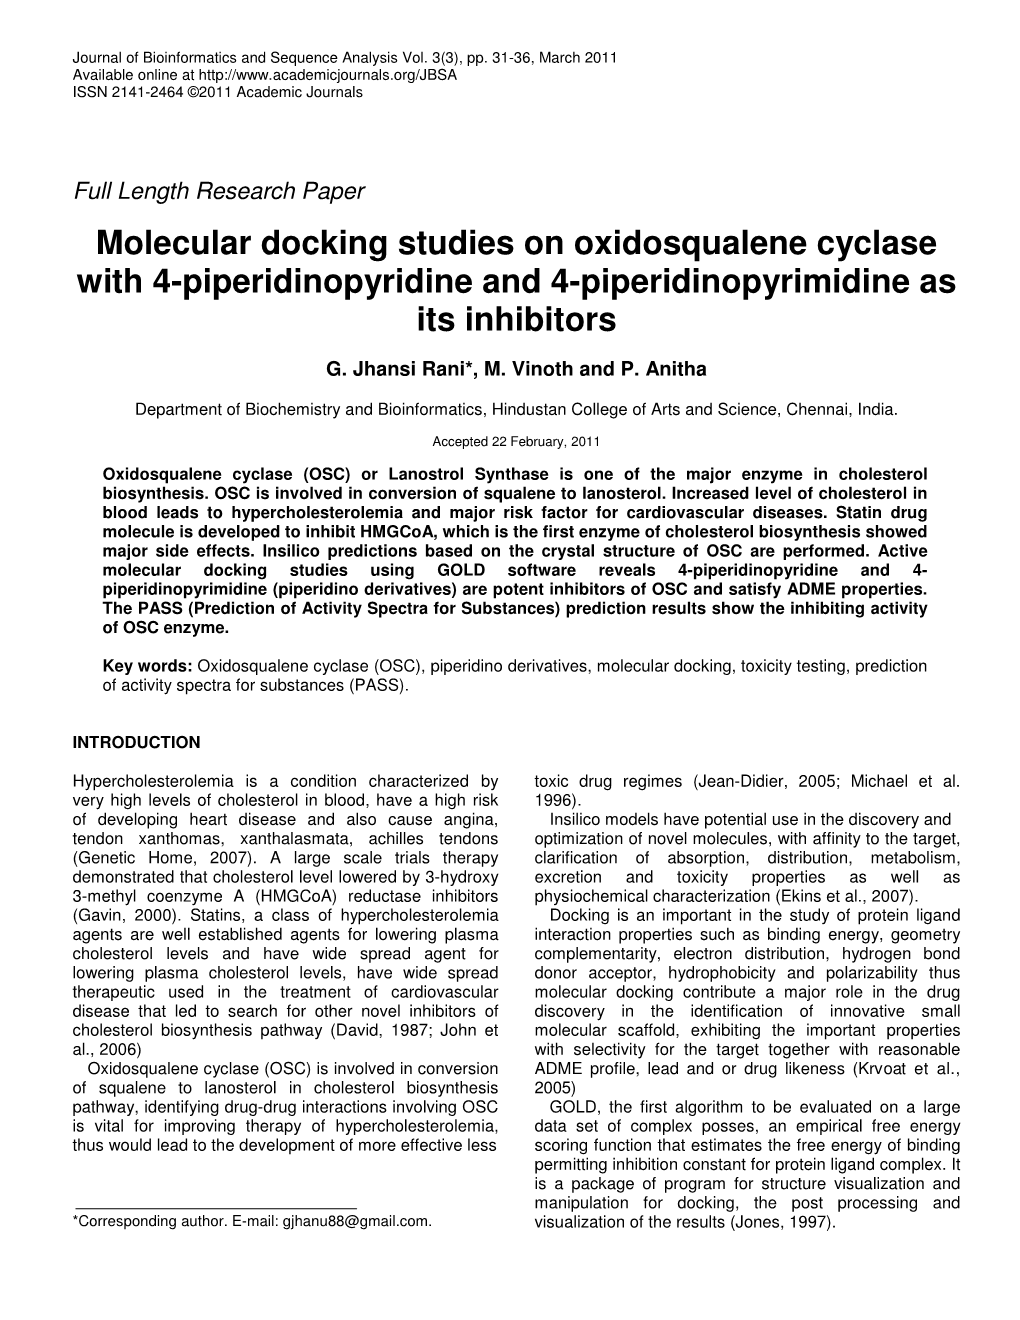 Molecular Docking Studies on Oxidosqualene Cyclase with 4-Piperidinopyridine and 4-Piperidinopyrimidine As Its Inhibitors